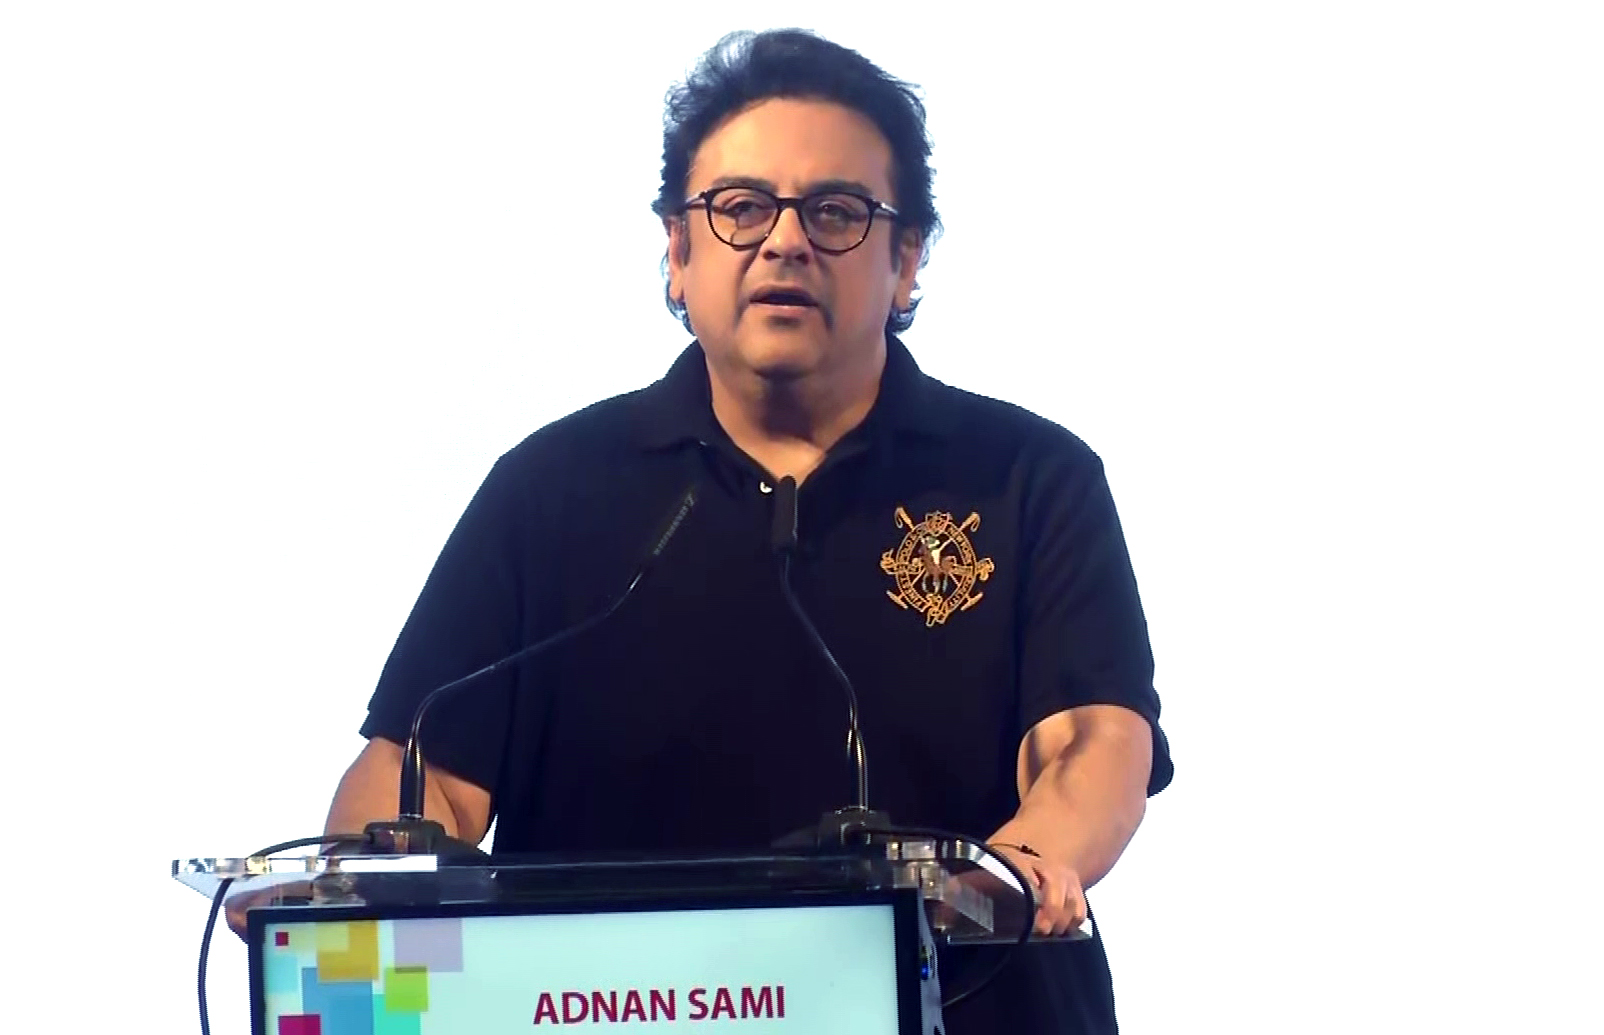 Singer Adnan Sami criticises his former country Pakistan